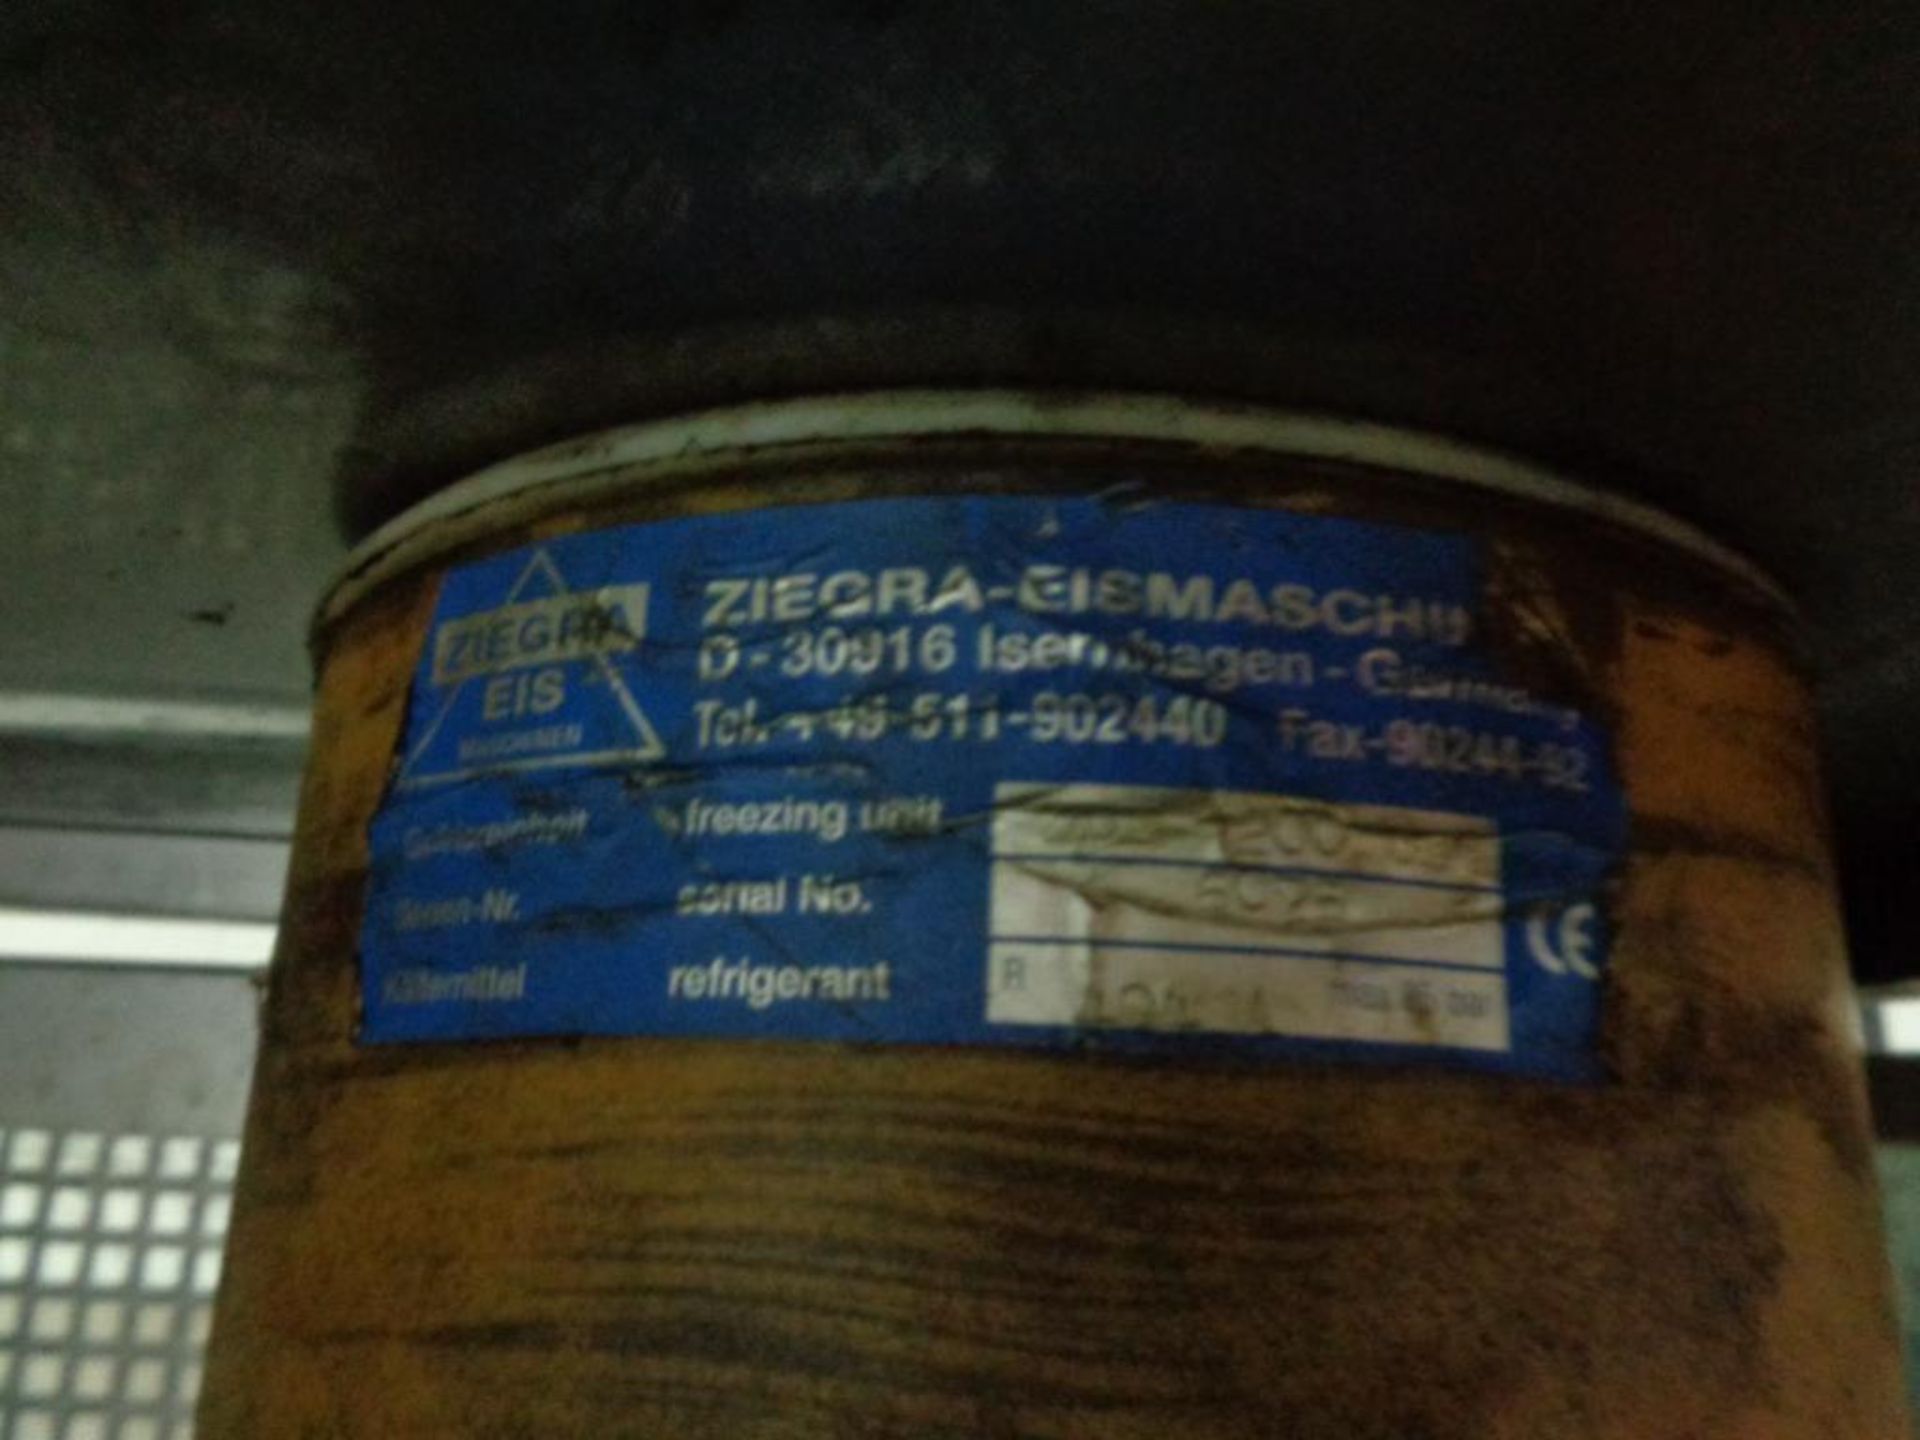 Ziegra 1200 stainless steel ice machine mounted on single door ice freezer - Image 6 of 7